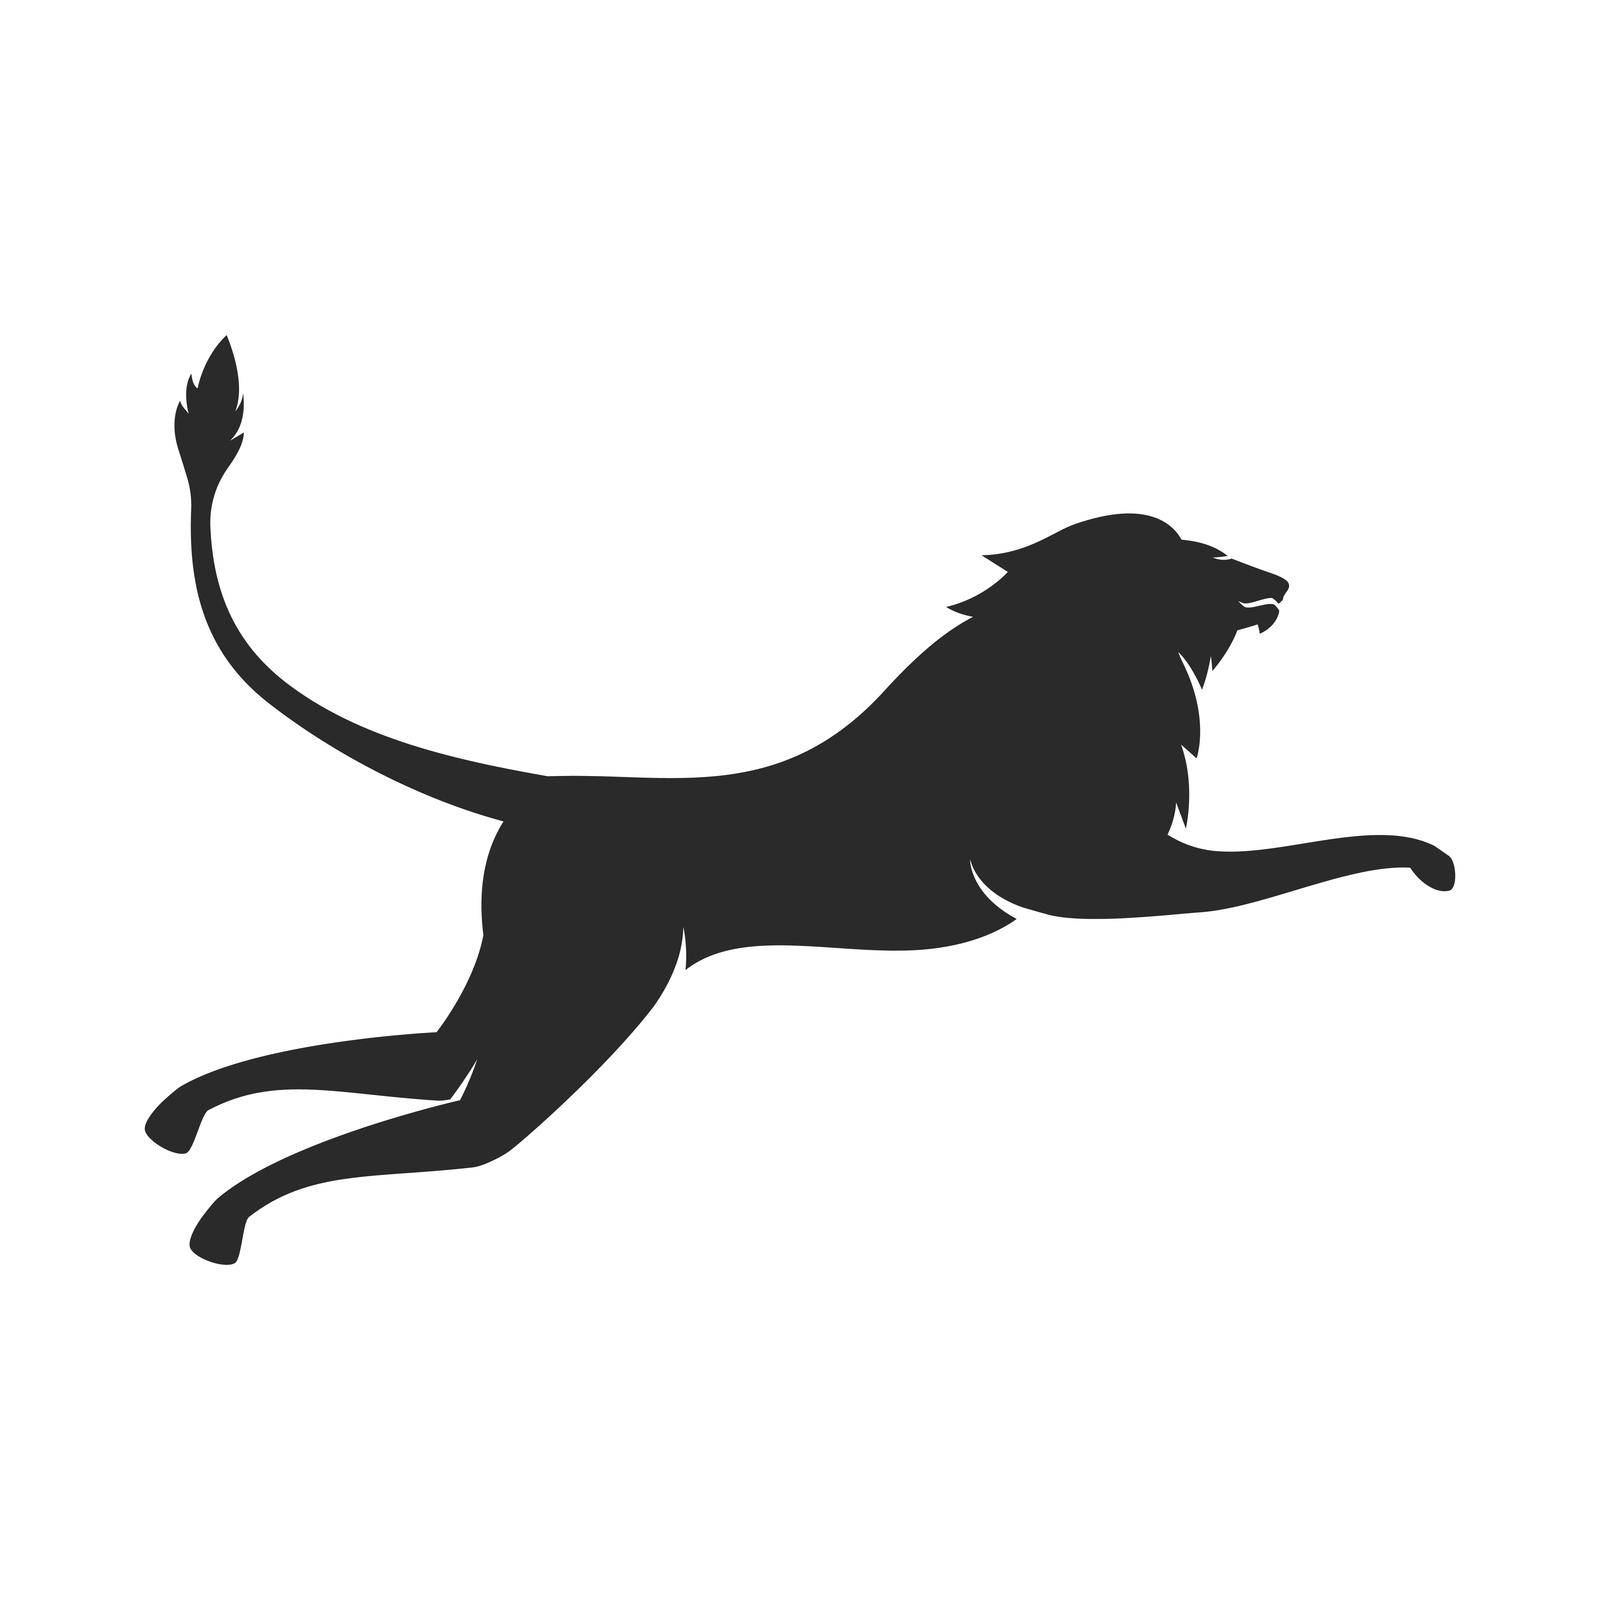 Lion illustration logo vector by awk